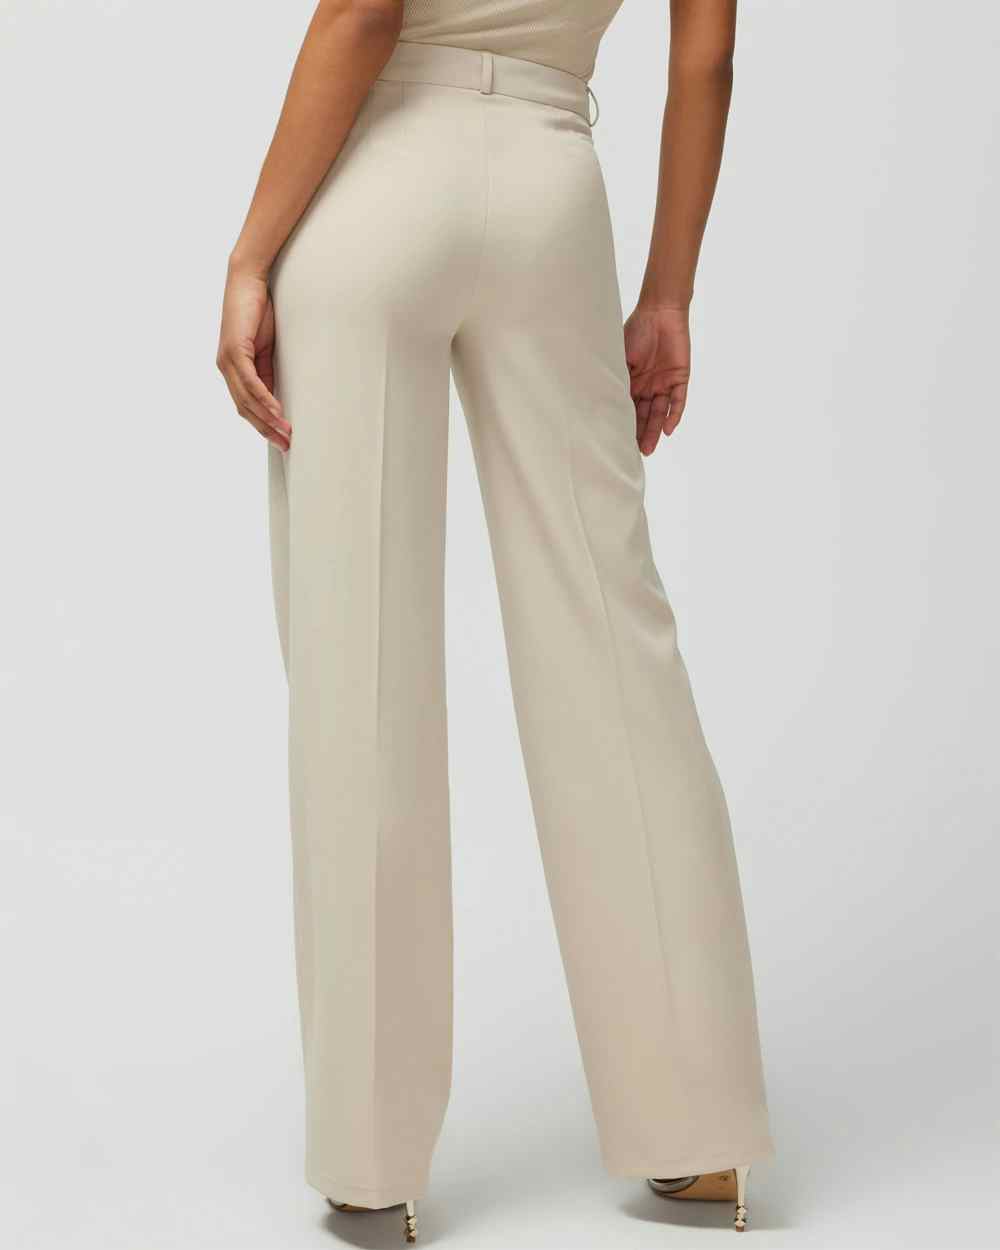 Shop Women's Pants - White, Black, Ankle, Dress | White House Black Market